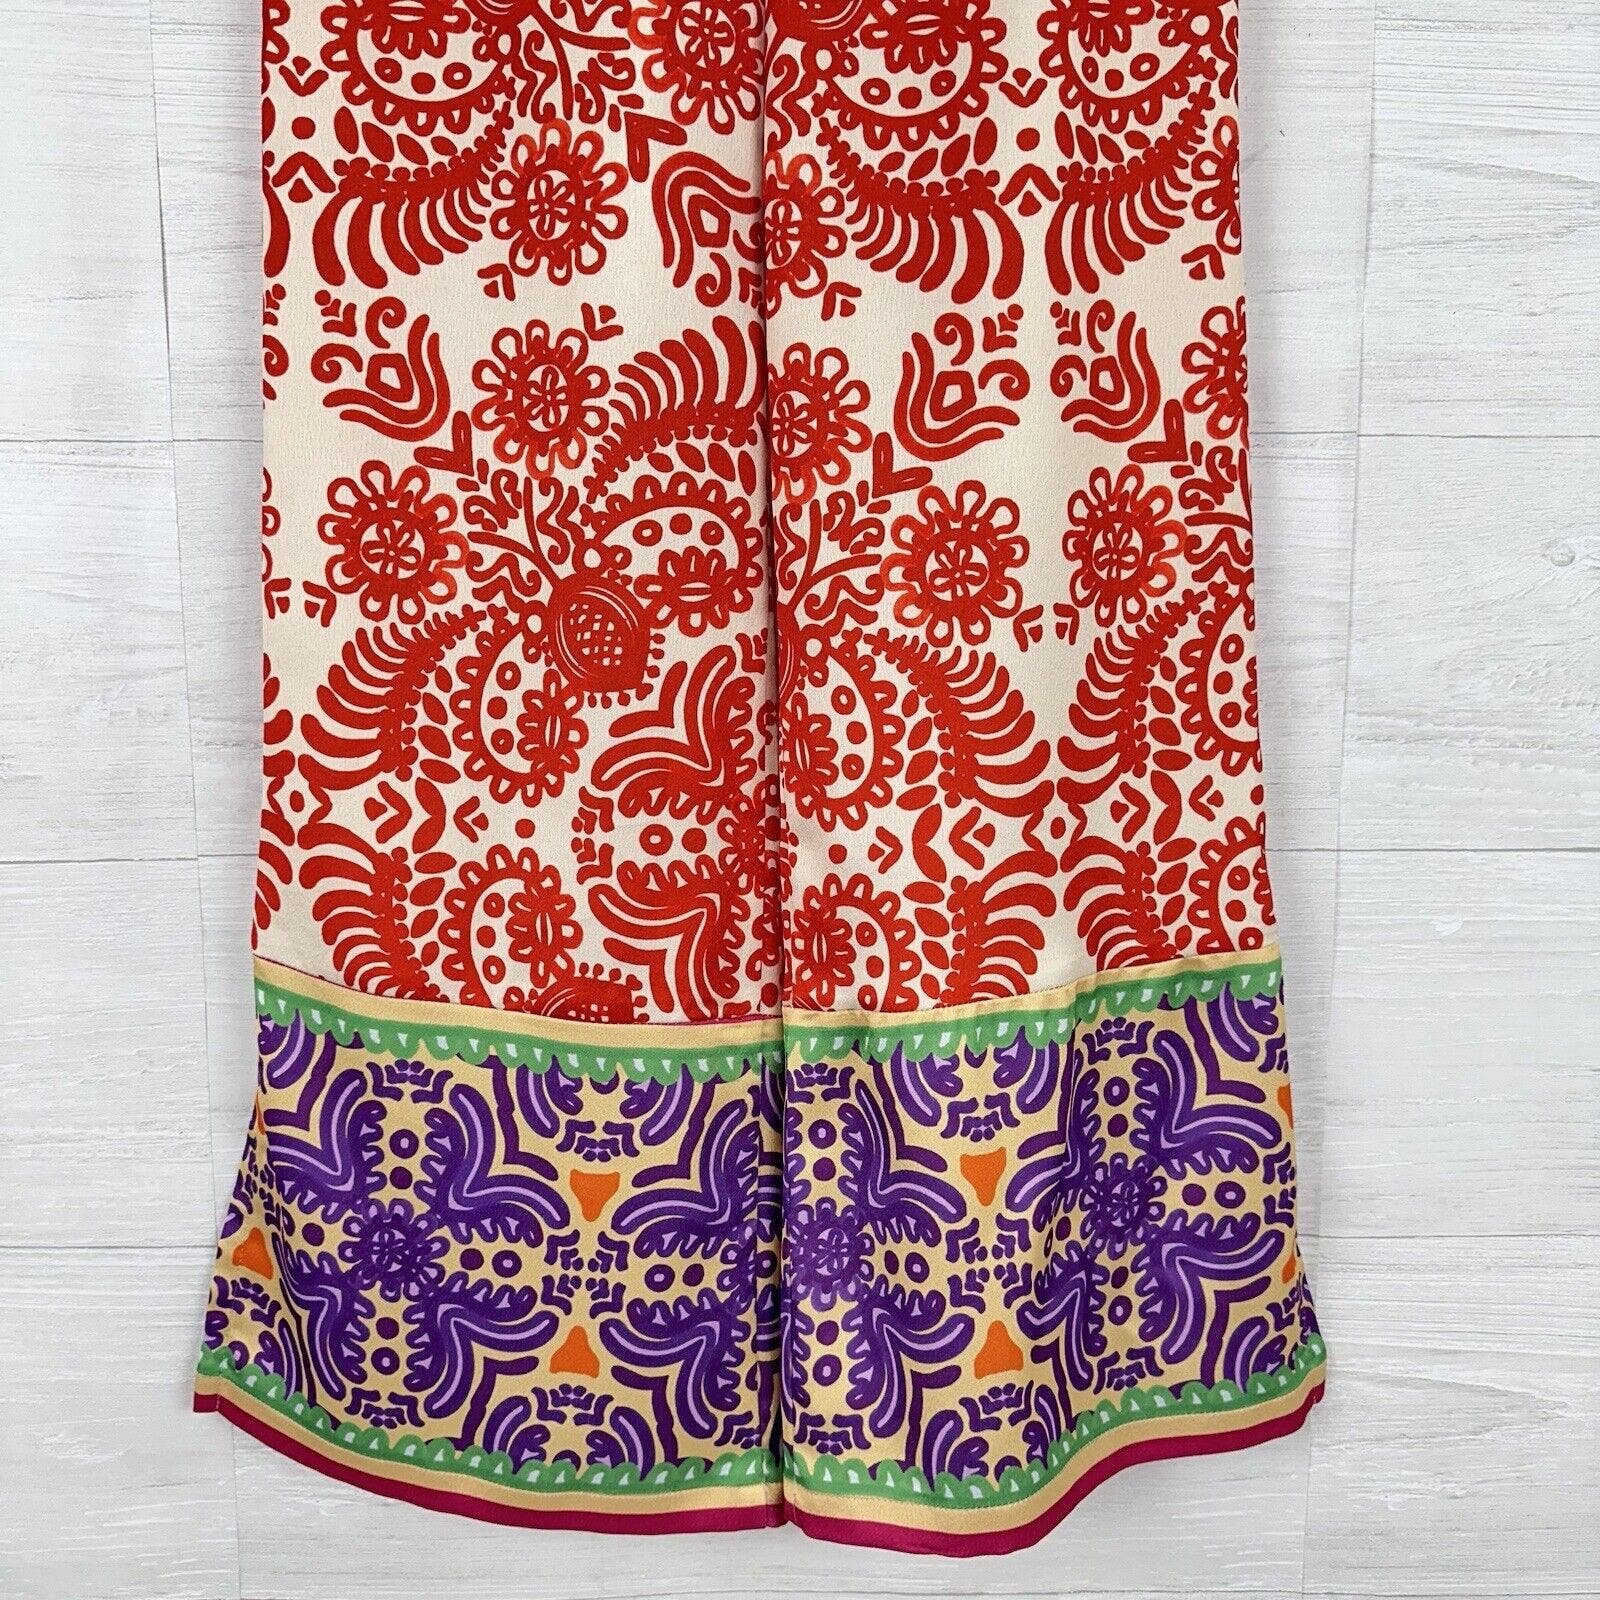 Factory Direct  Zara Satin Printed Pajama Style Wide Leg Pants Size S Floral Orange Side Slits l5P4Cu8C6 Low Price